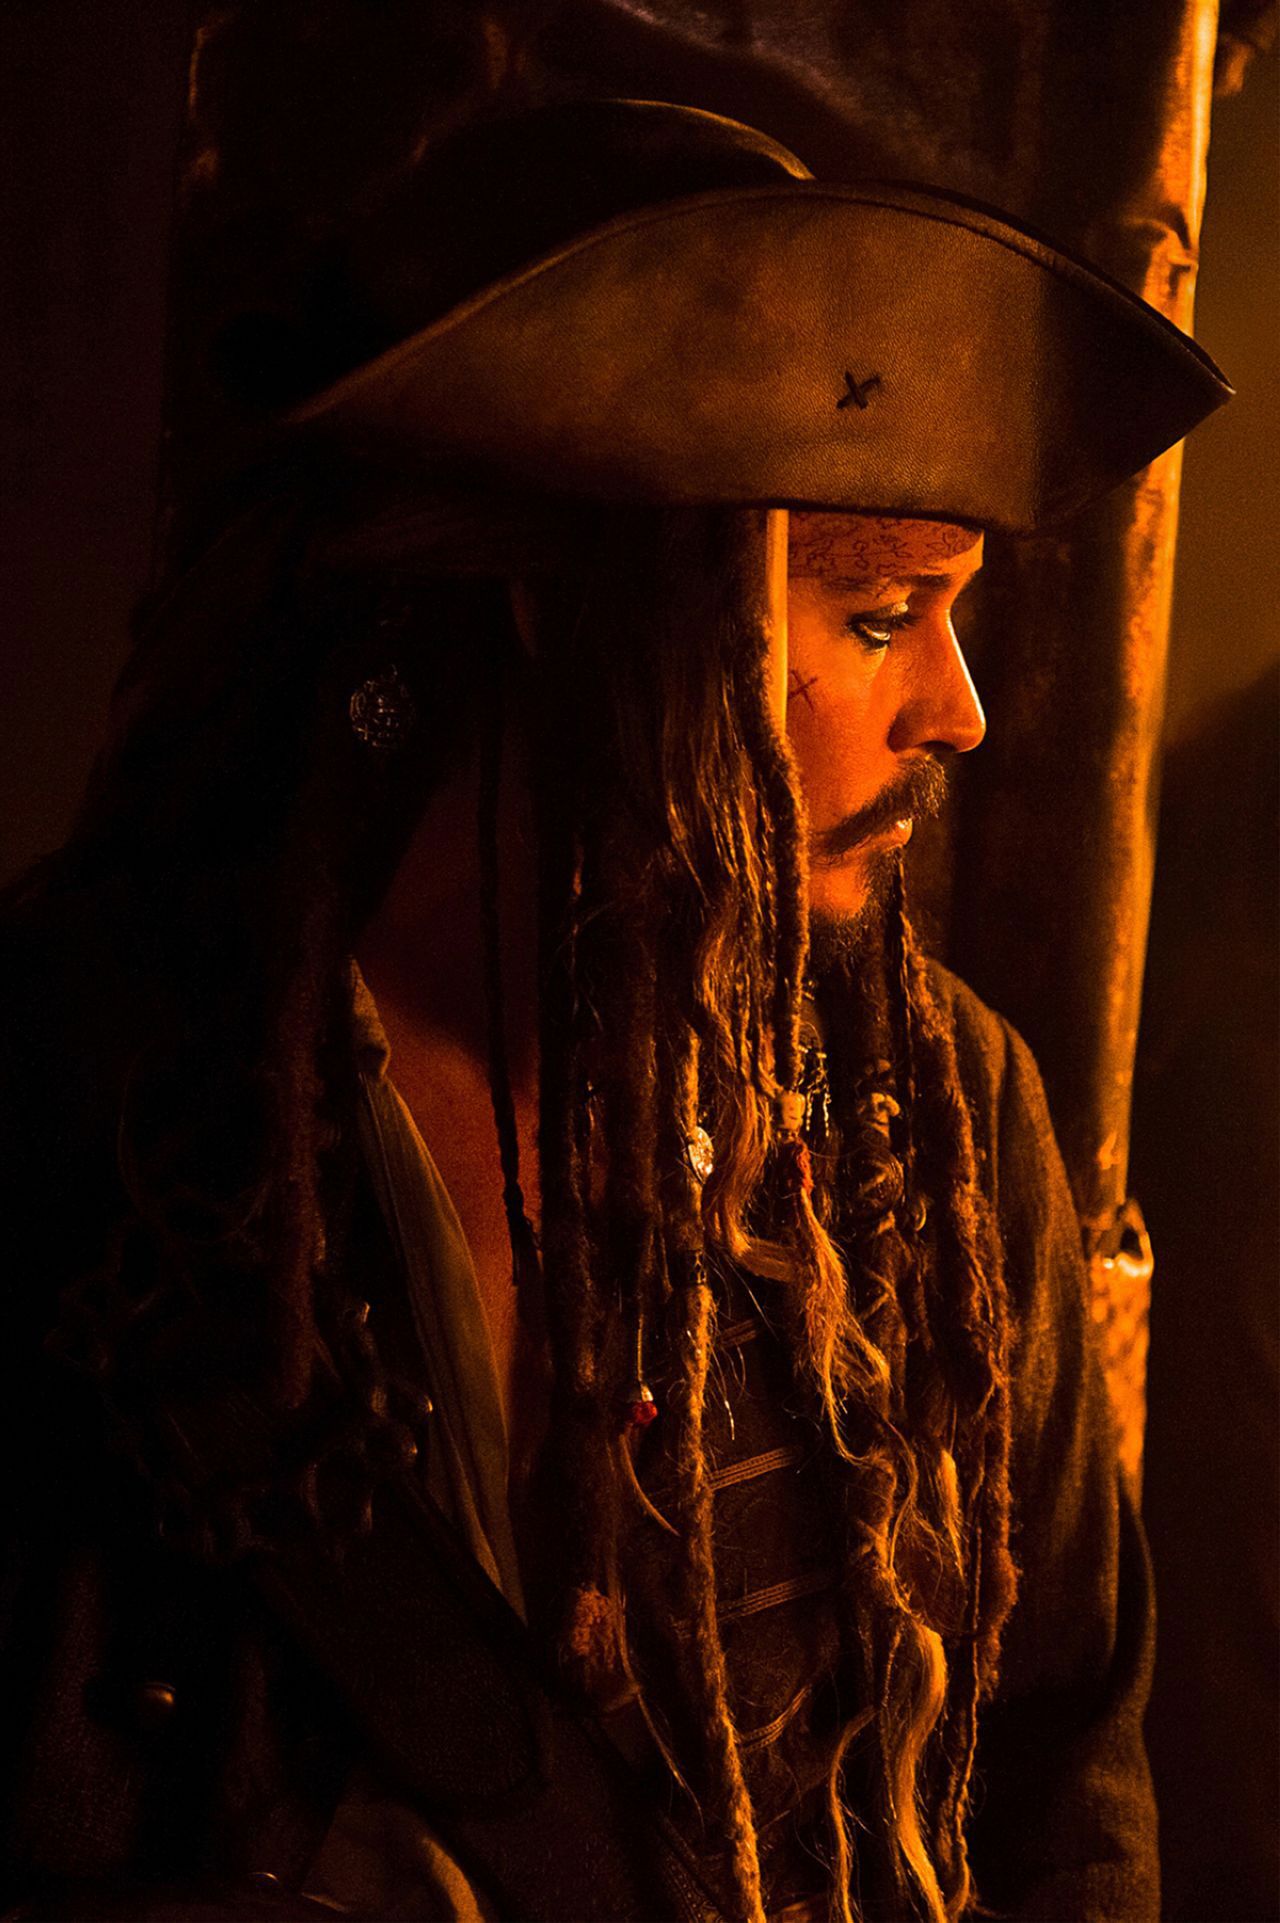 Pirates of the Caribbean: On Stranger Tides Image #5